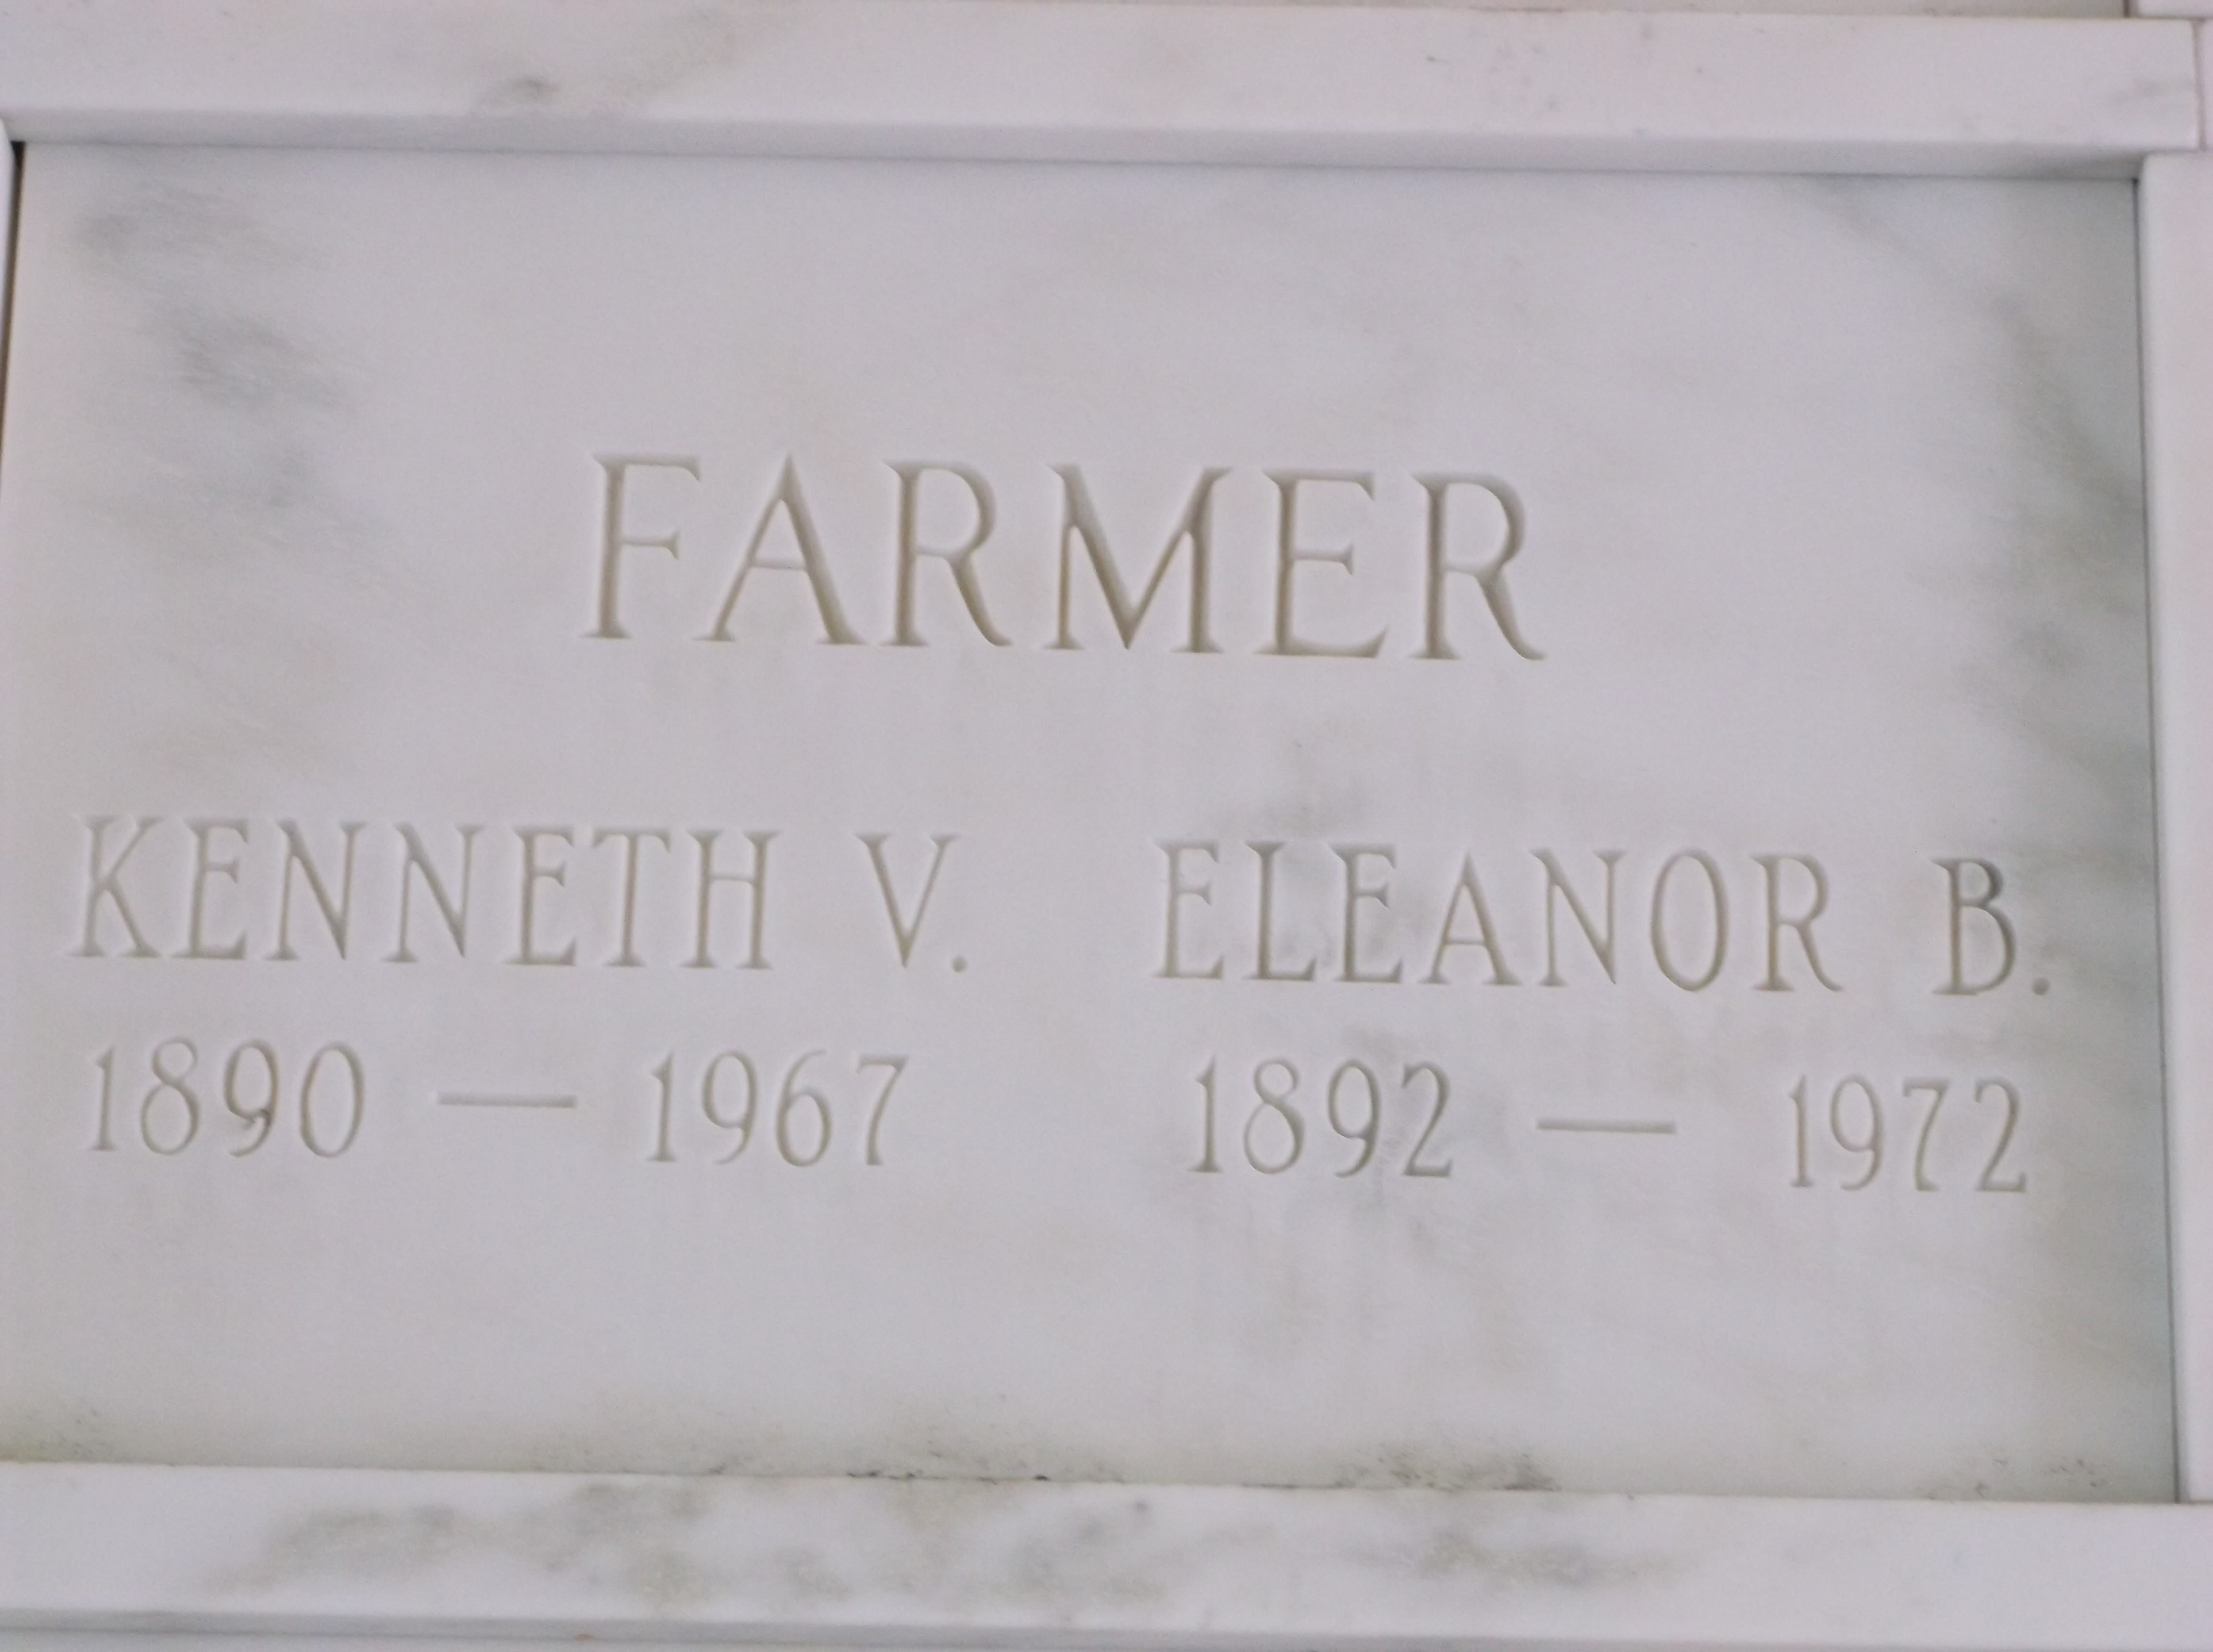 Eleanor B Farmer